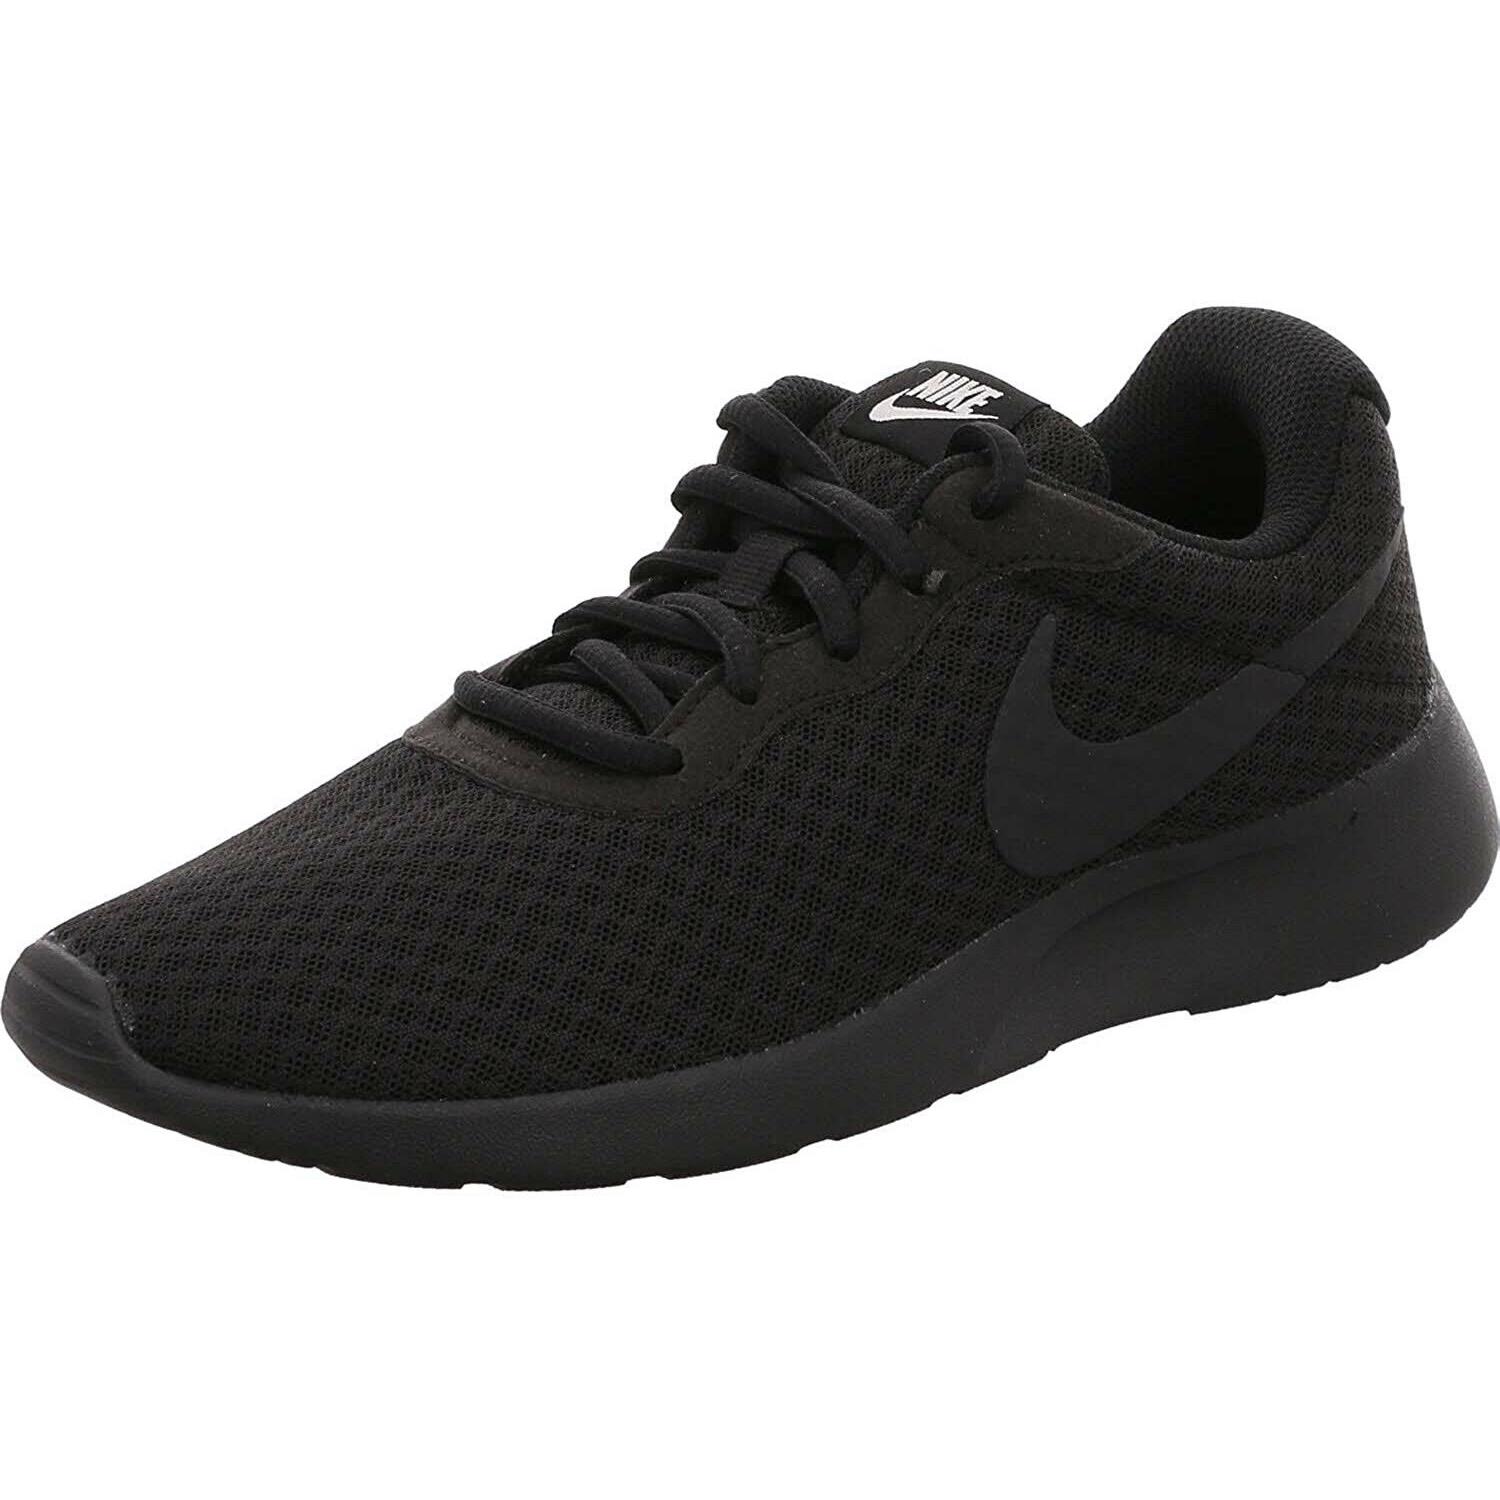 Nike Tanjun Womens Black Black 812655-002 Athletic Running Sneakers Shoes Sz10.5